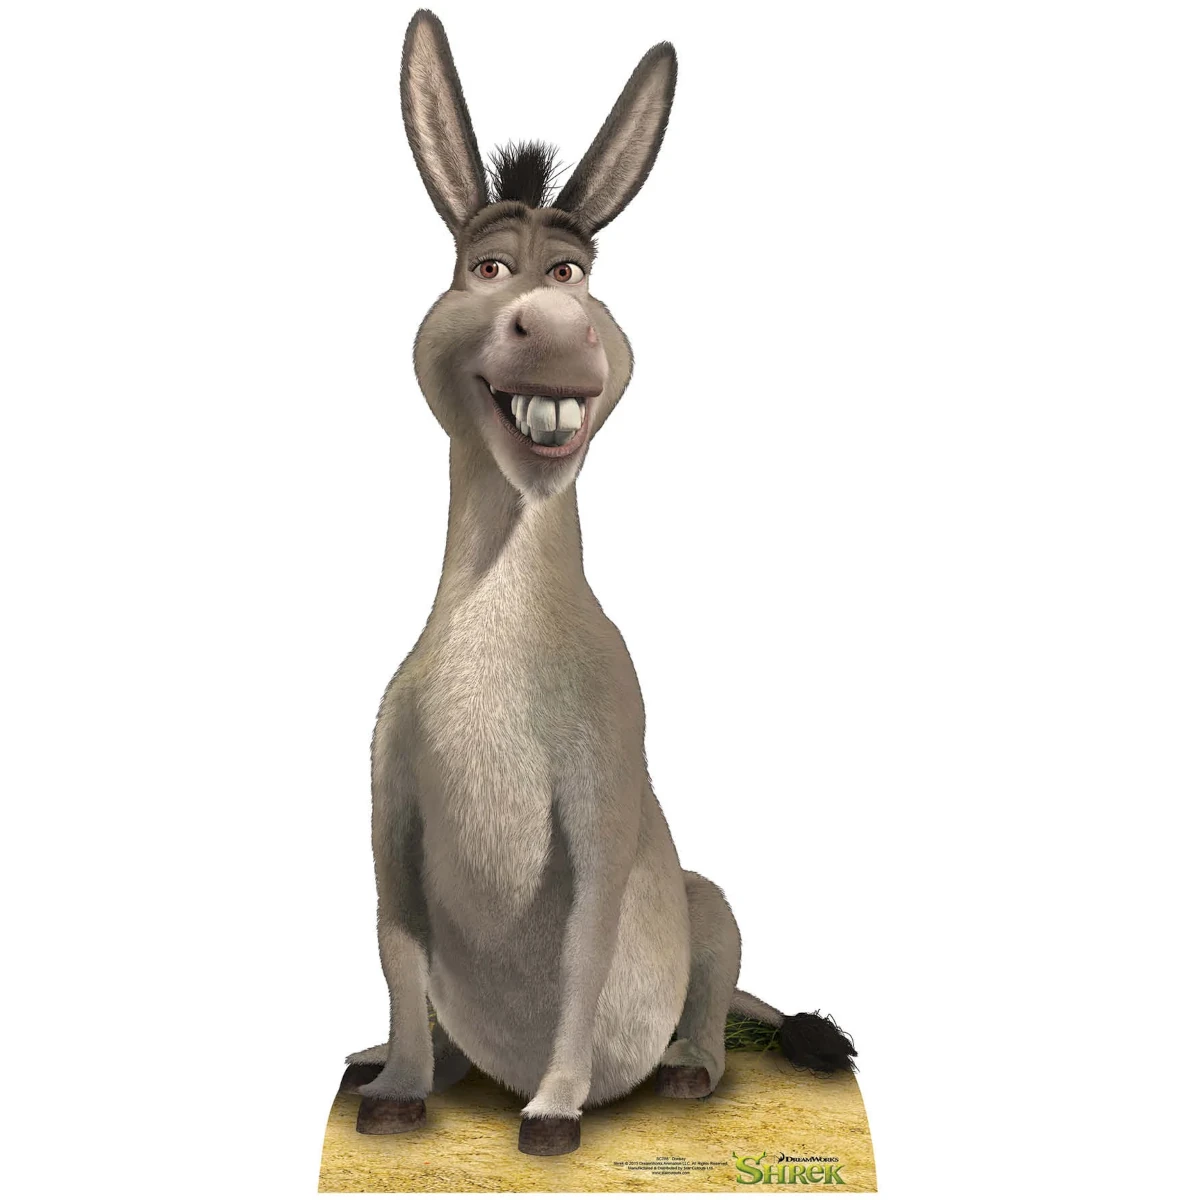 SC788 Donkey (DreamWorks Animation Shrek) Official Lifesize Cardboard Cutout Standee Front